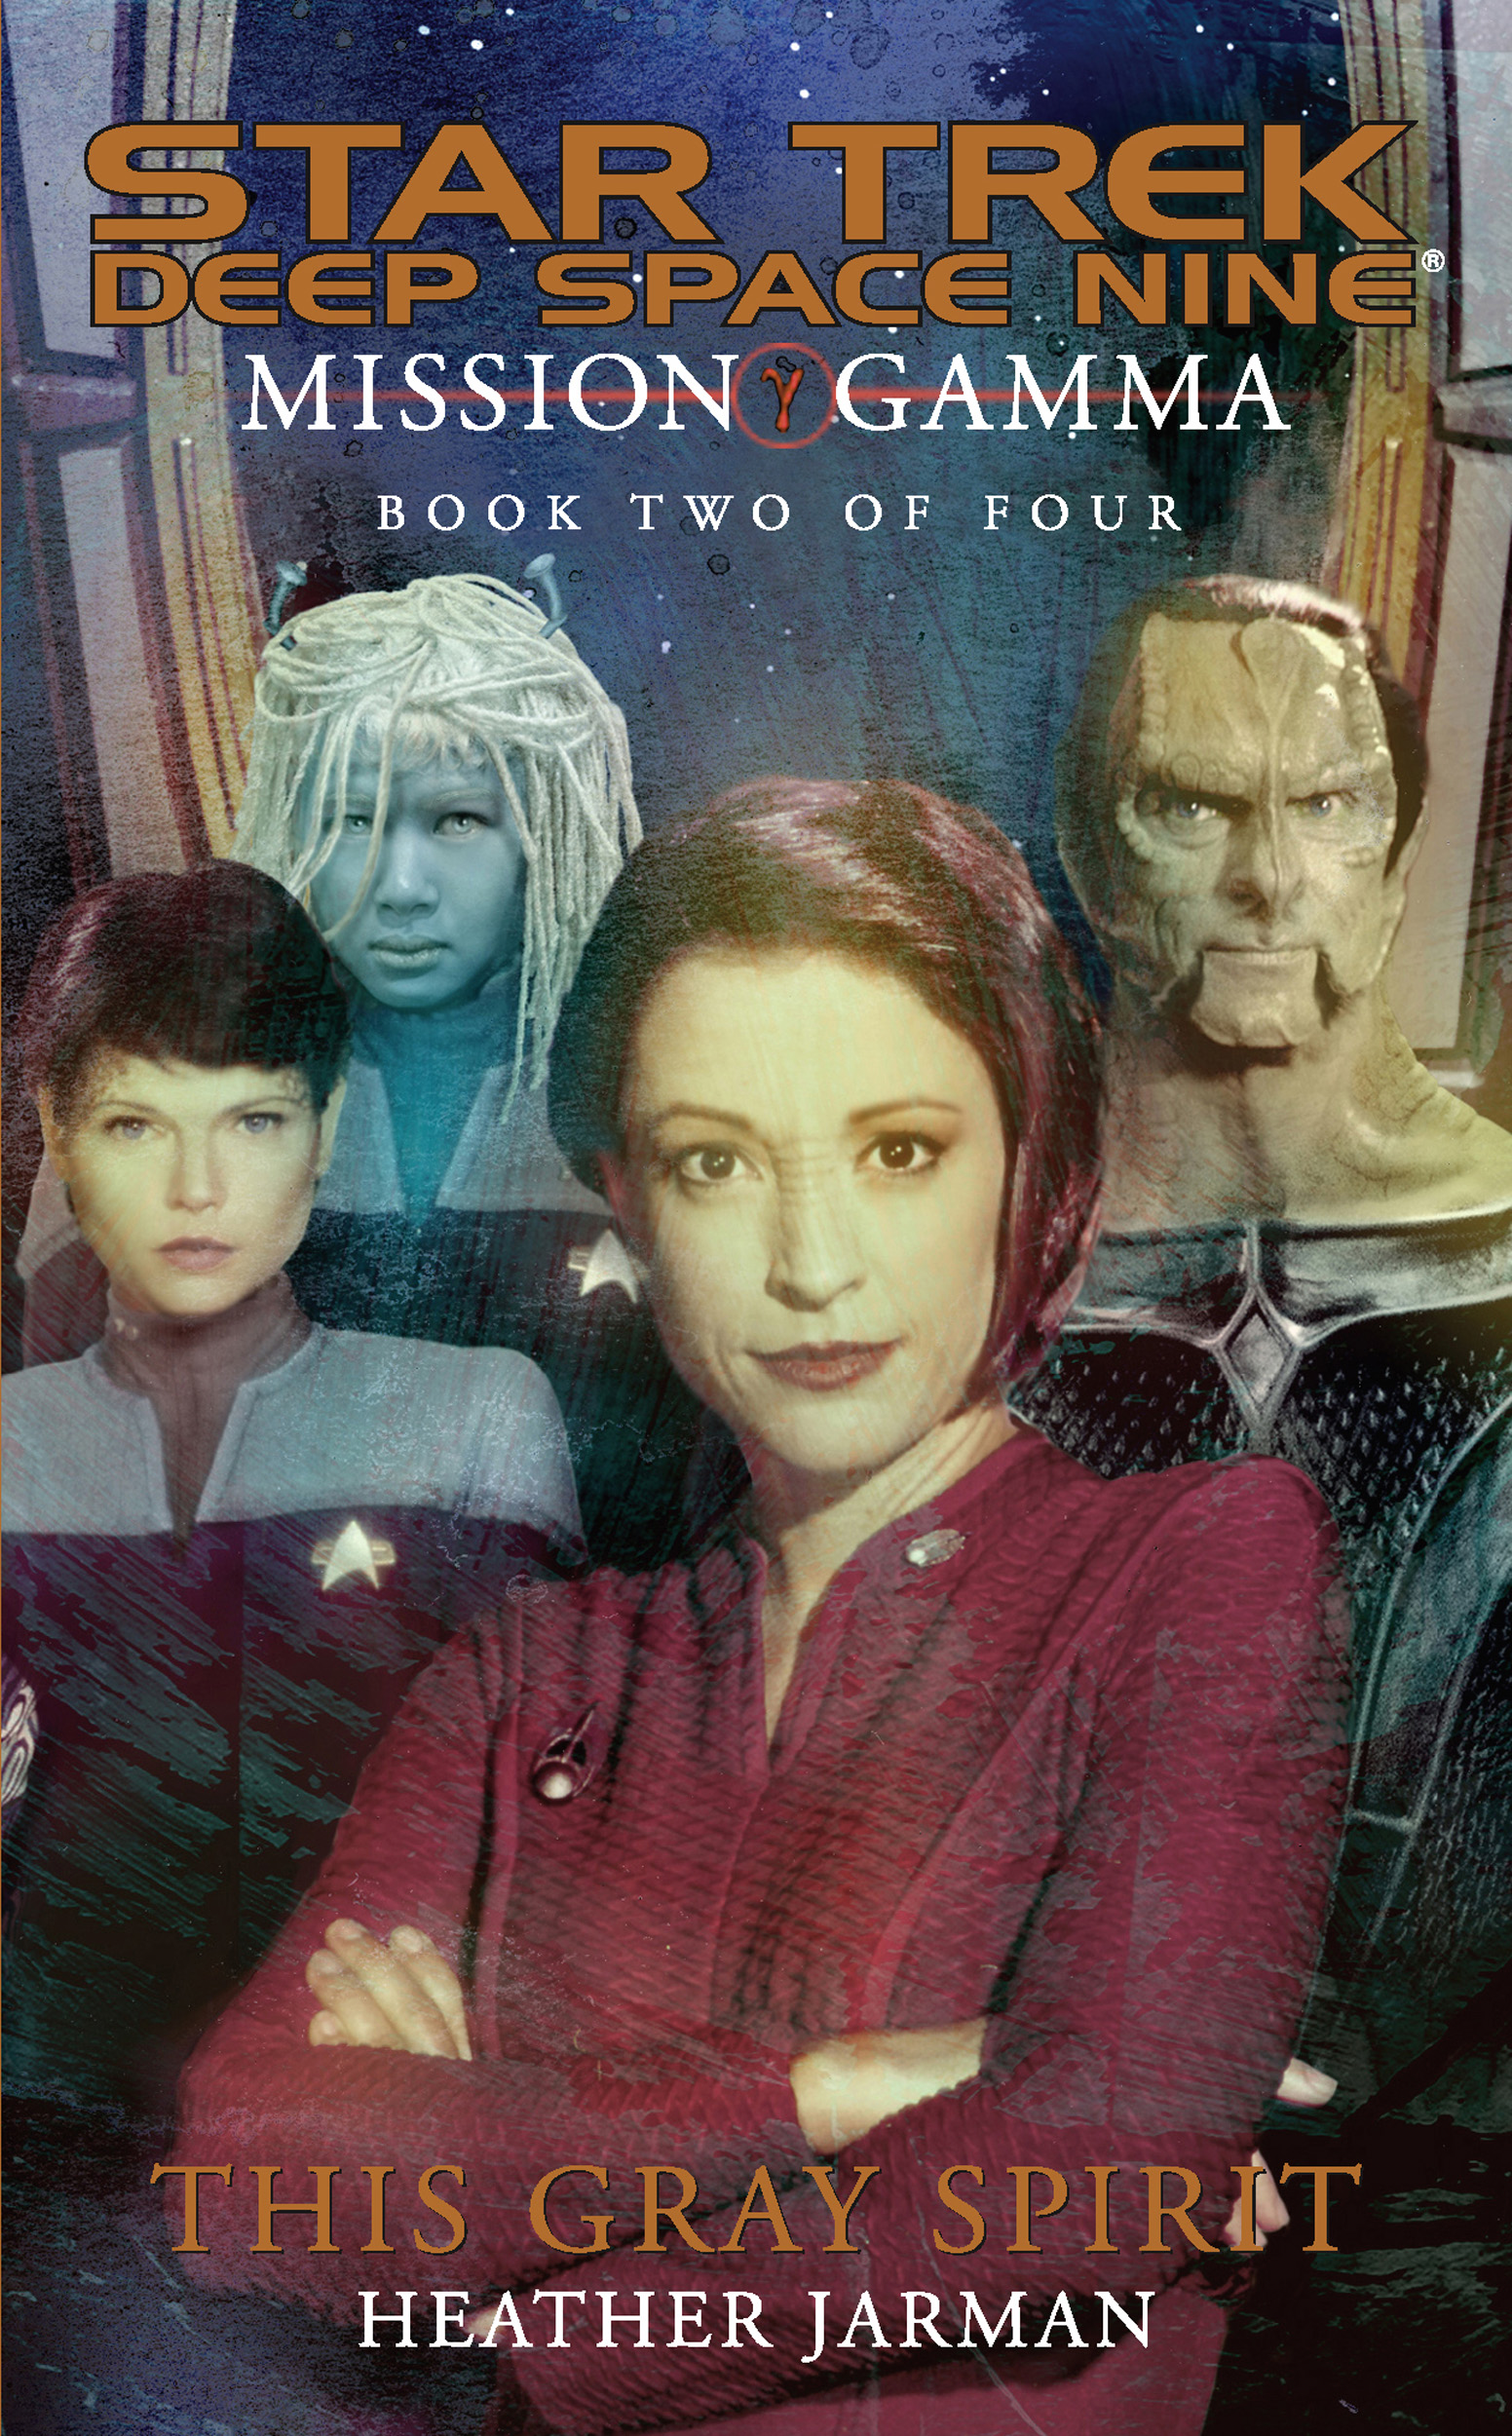 “Star Trek: Deep Space Nine: Mission Gamma Book 2: This Gray Spirit” Review by Roqoodepot.wordpress.com